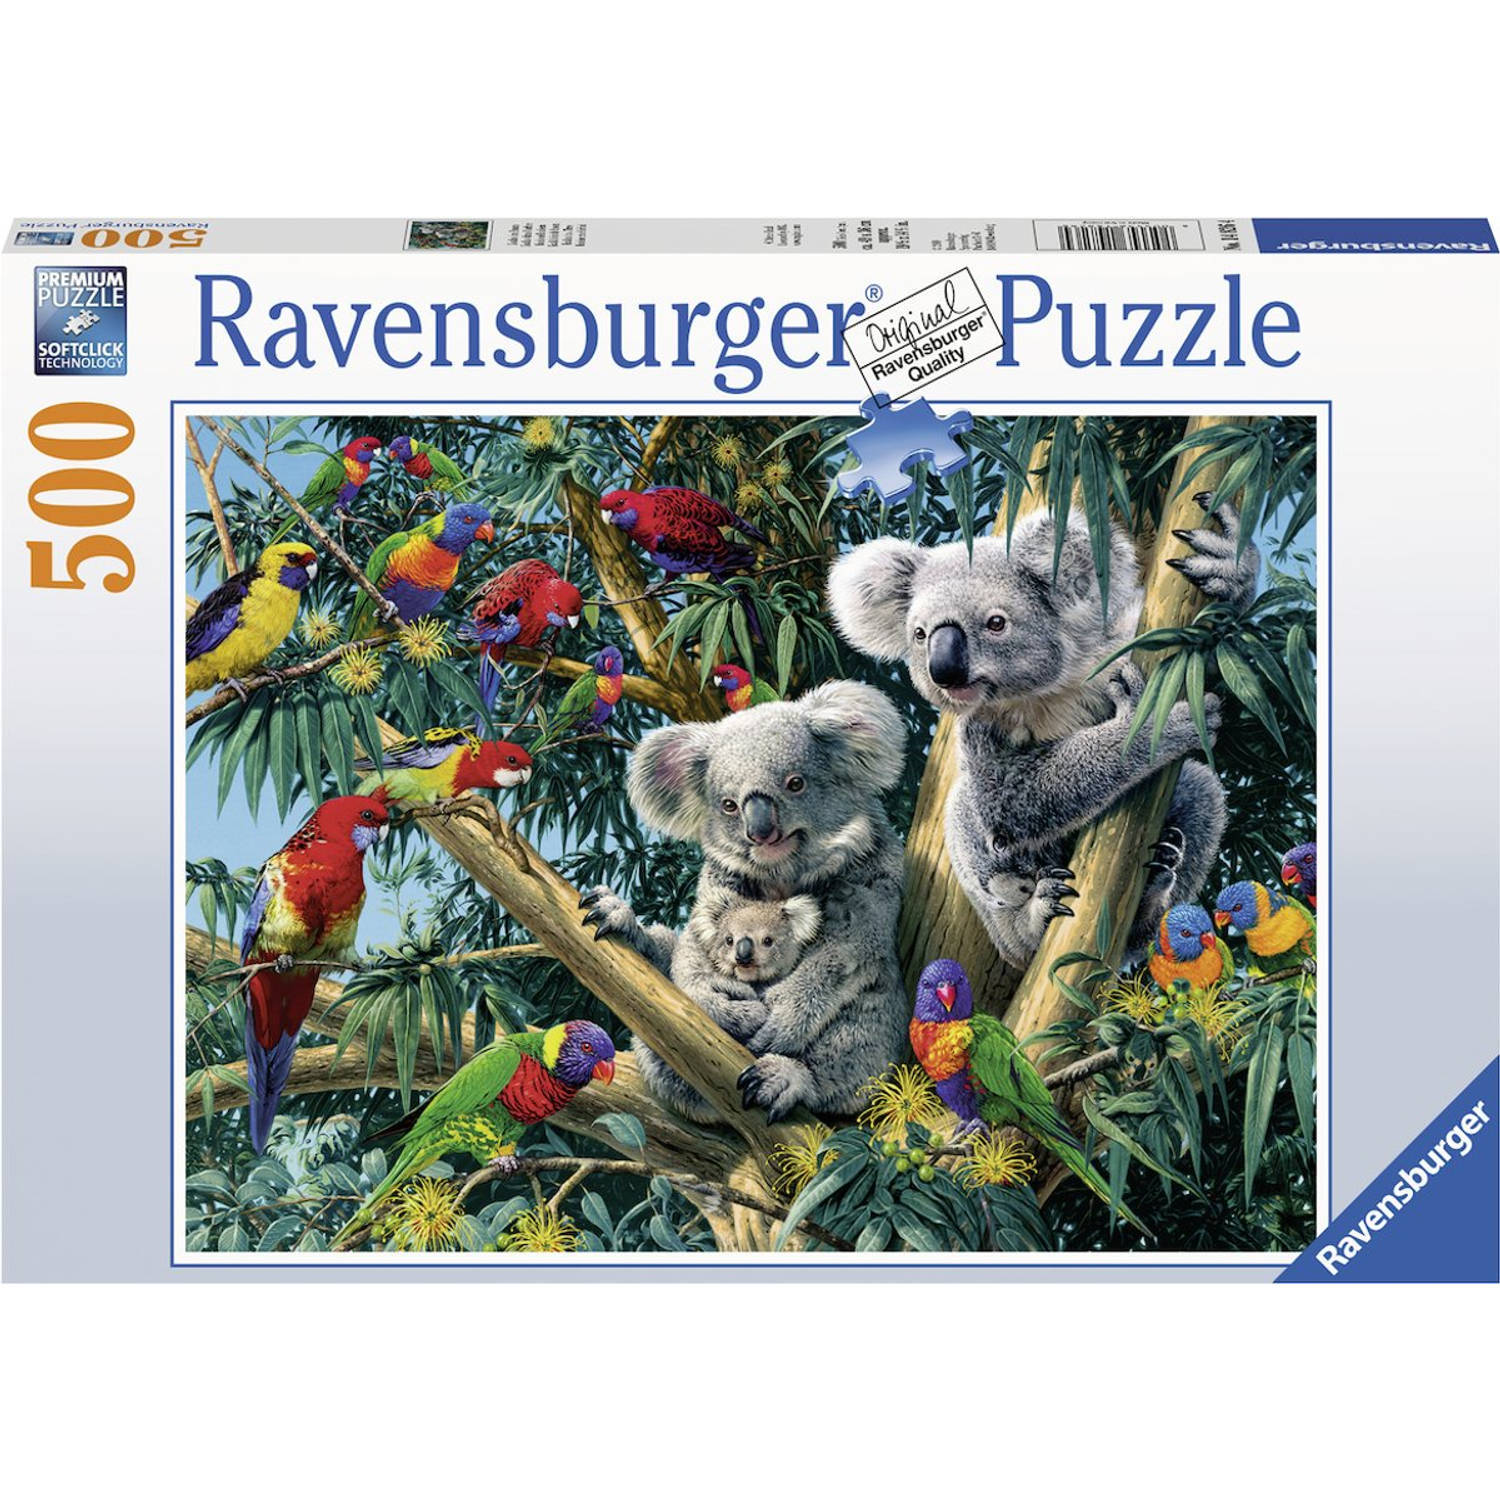 Ravensburger puzzel 500 stukjes Koalas in de boom